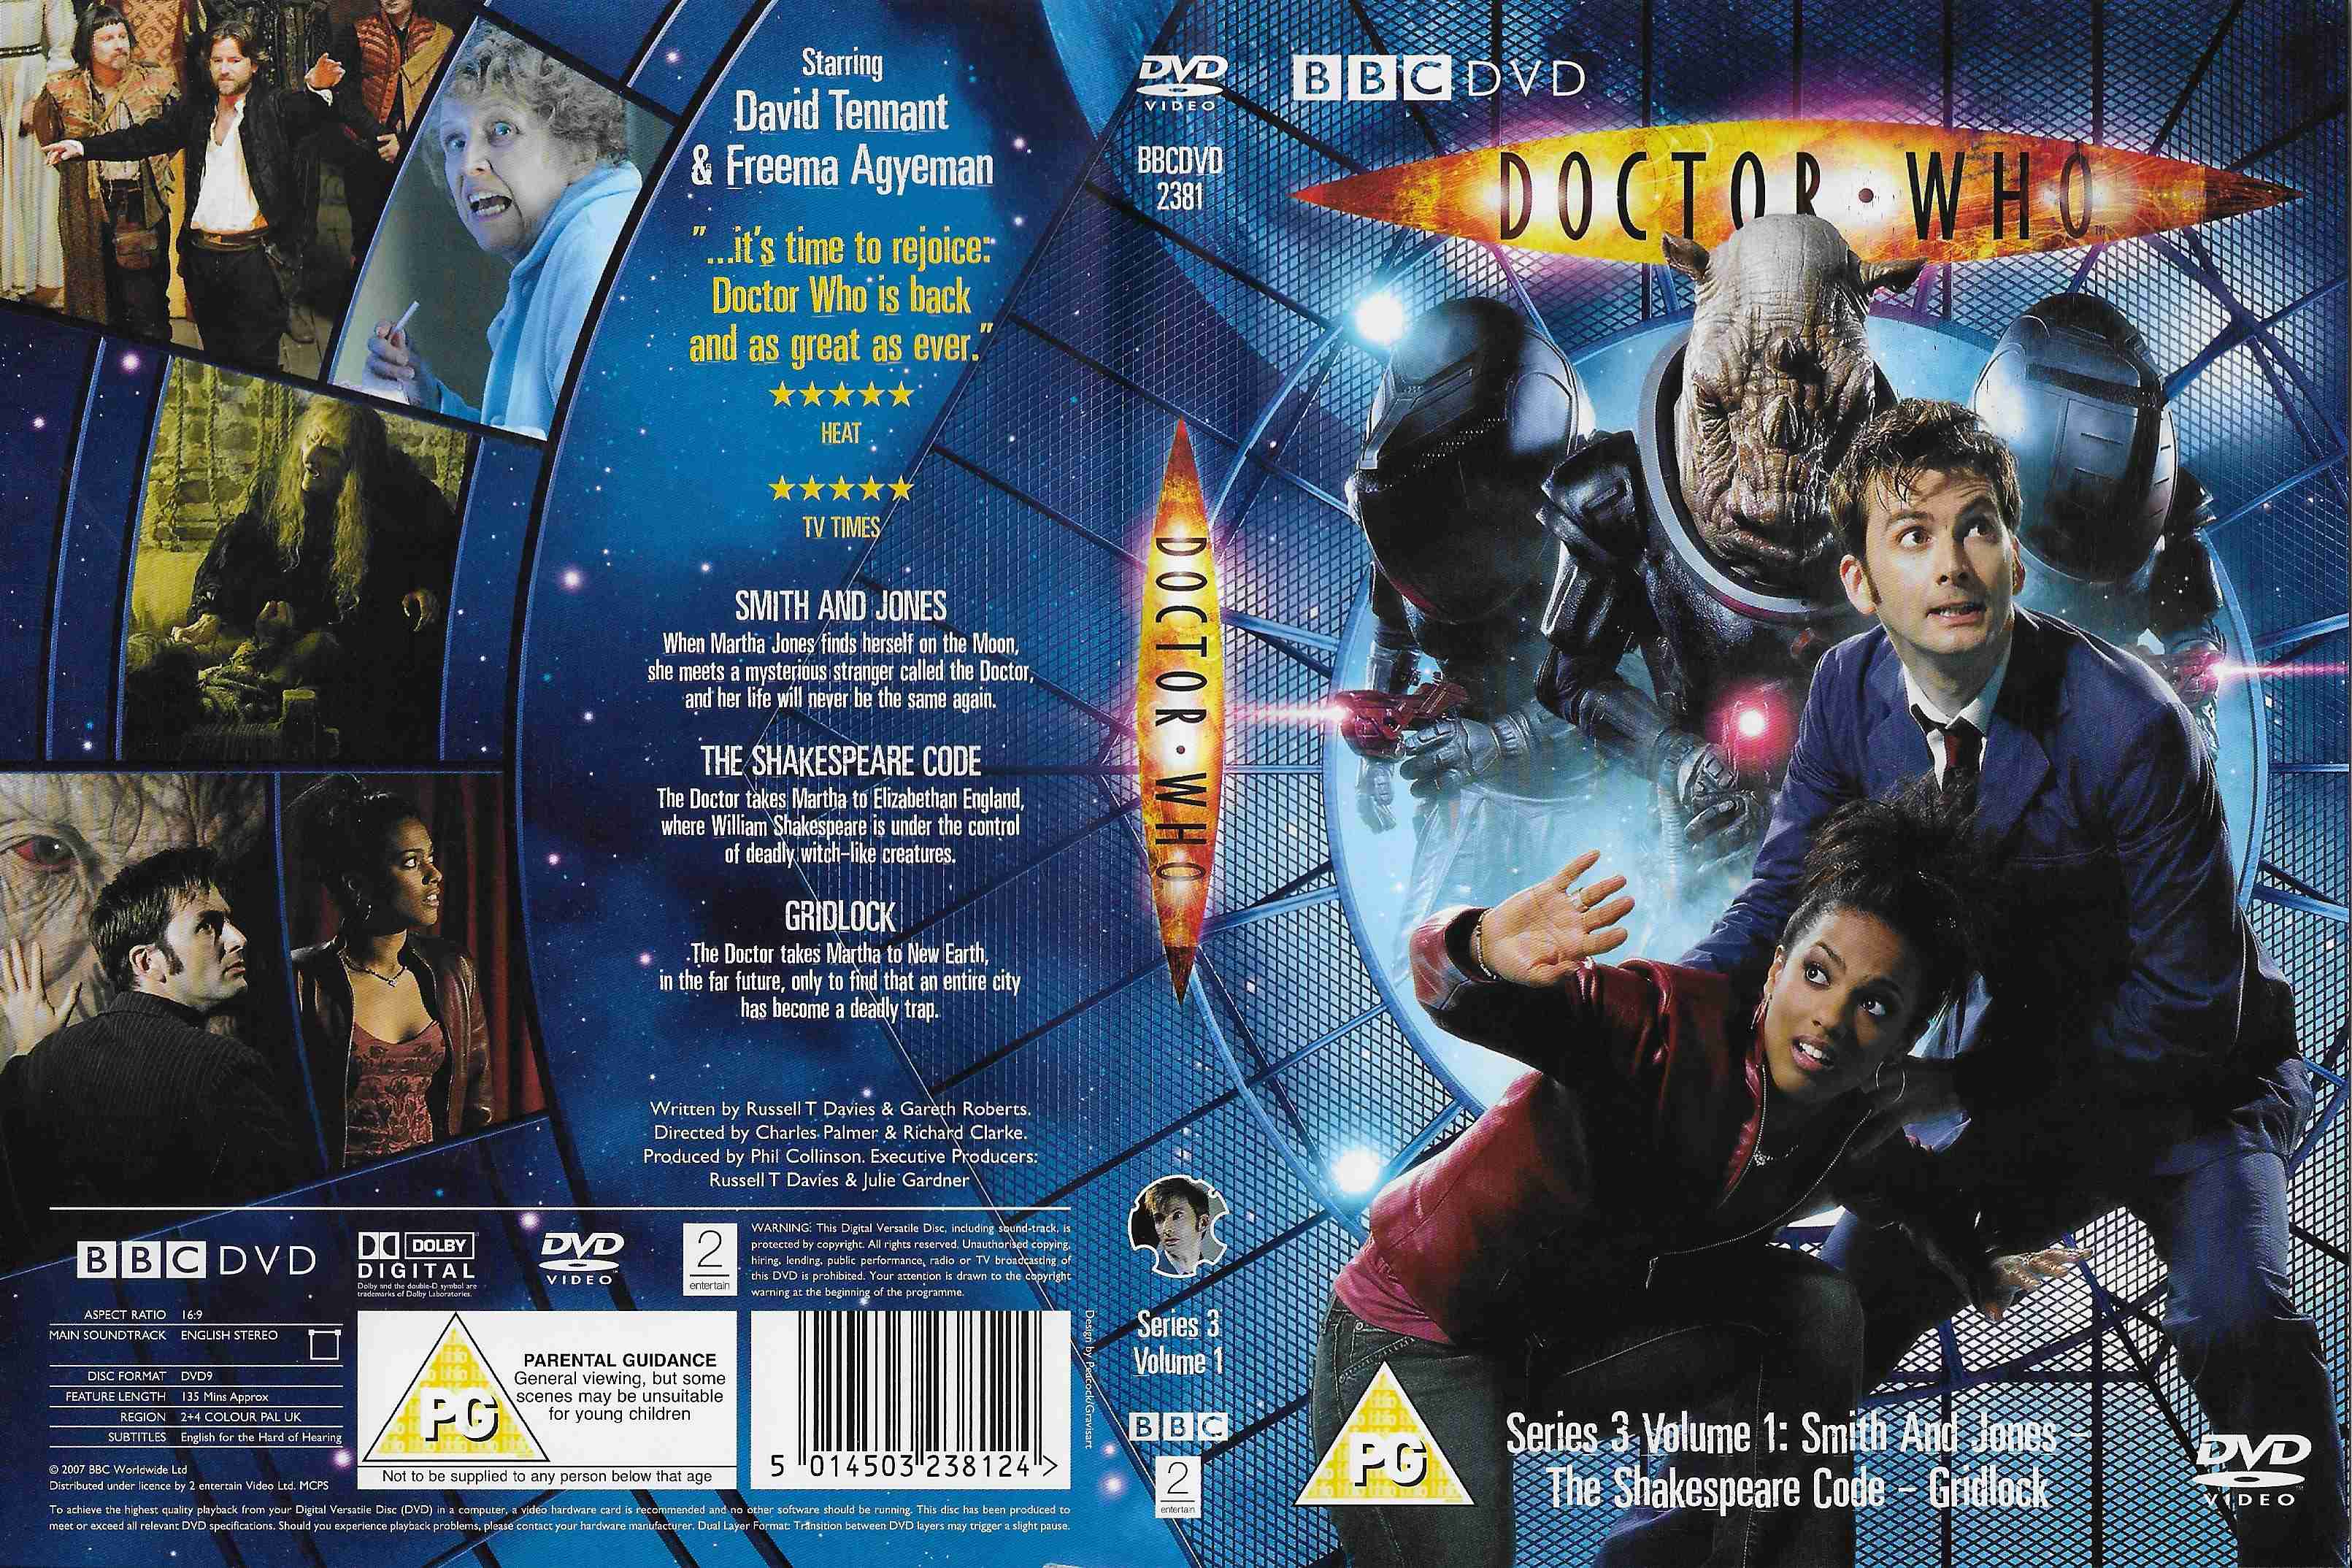 Back cover of BBCDVD 2381